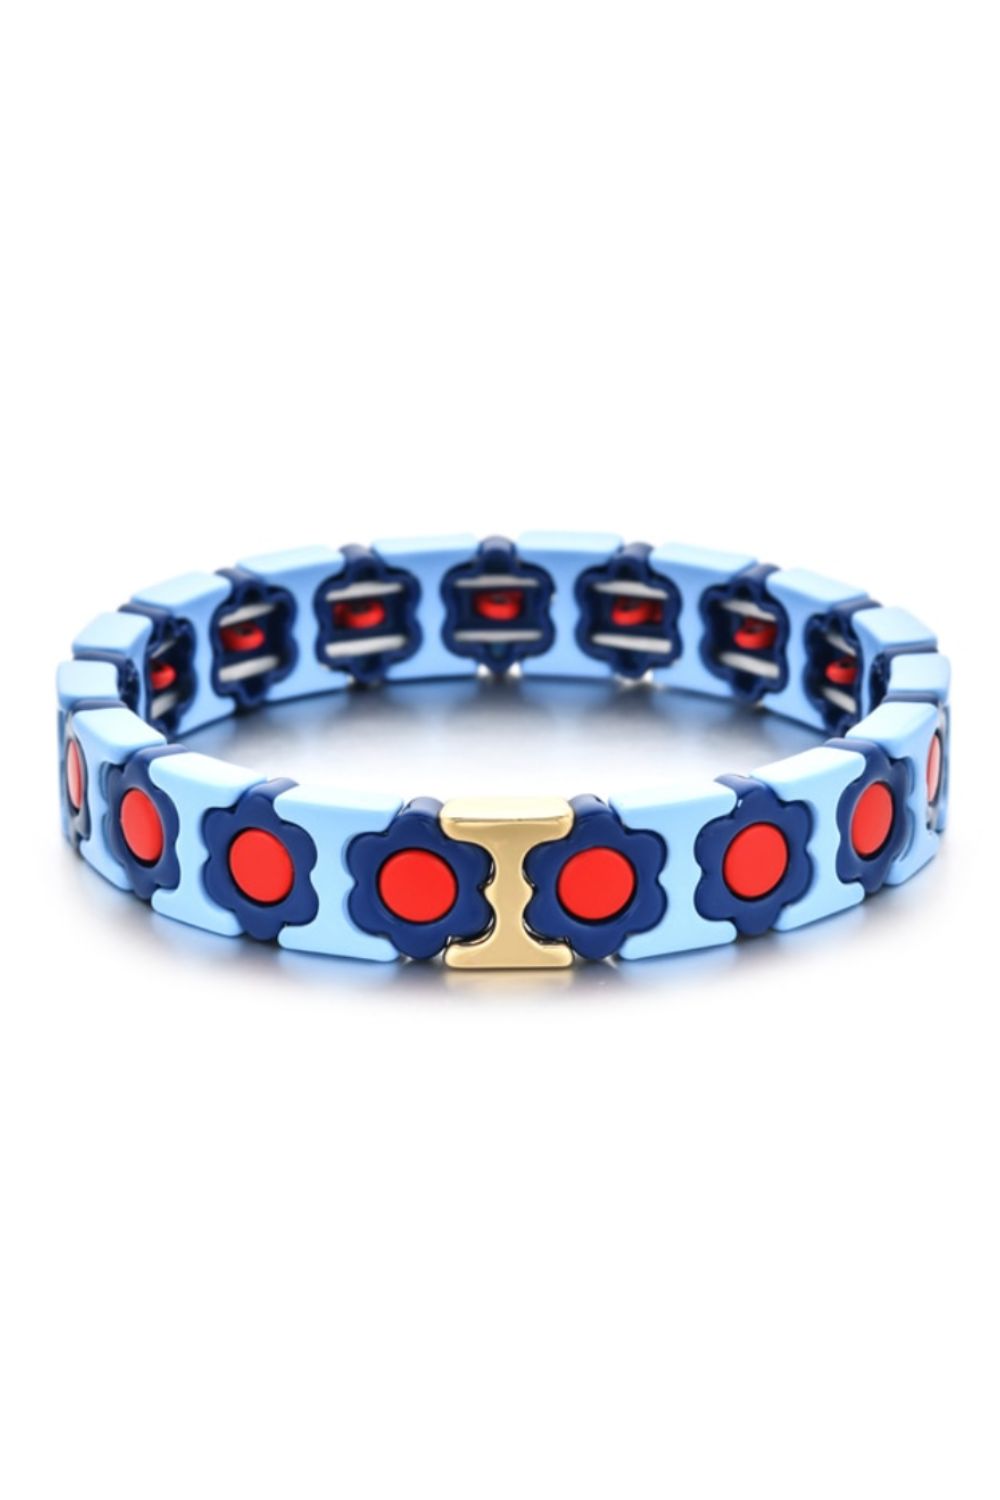 Daisy chain bracelet - navy/pale blue/red